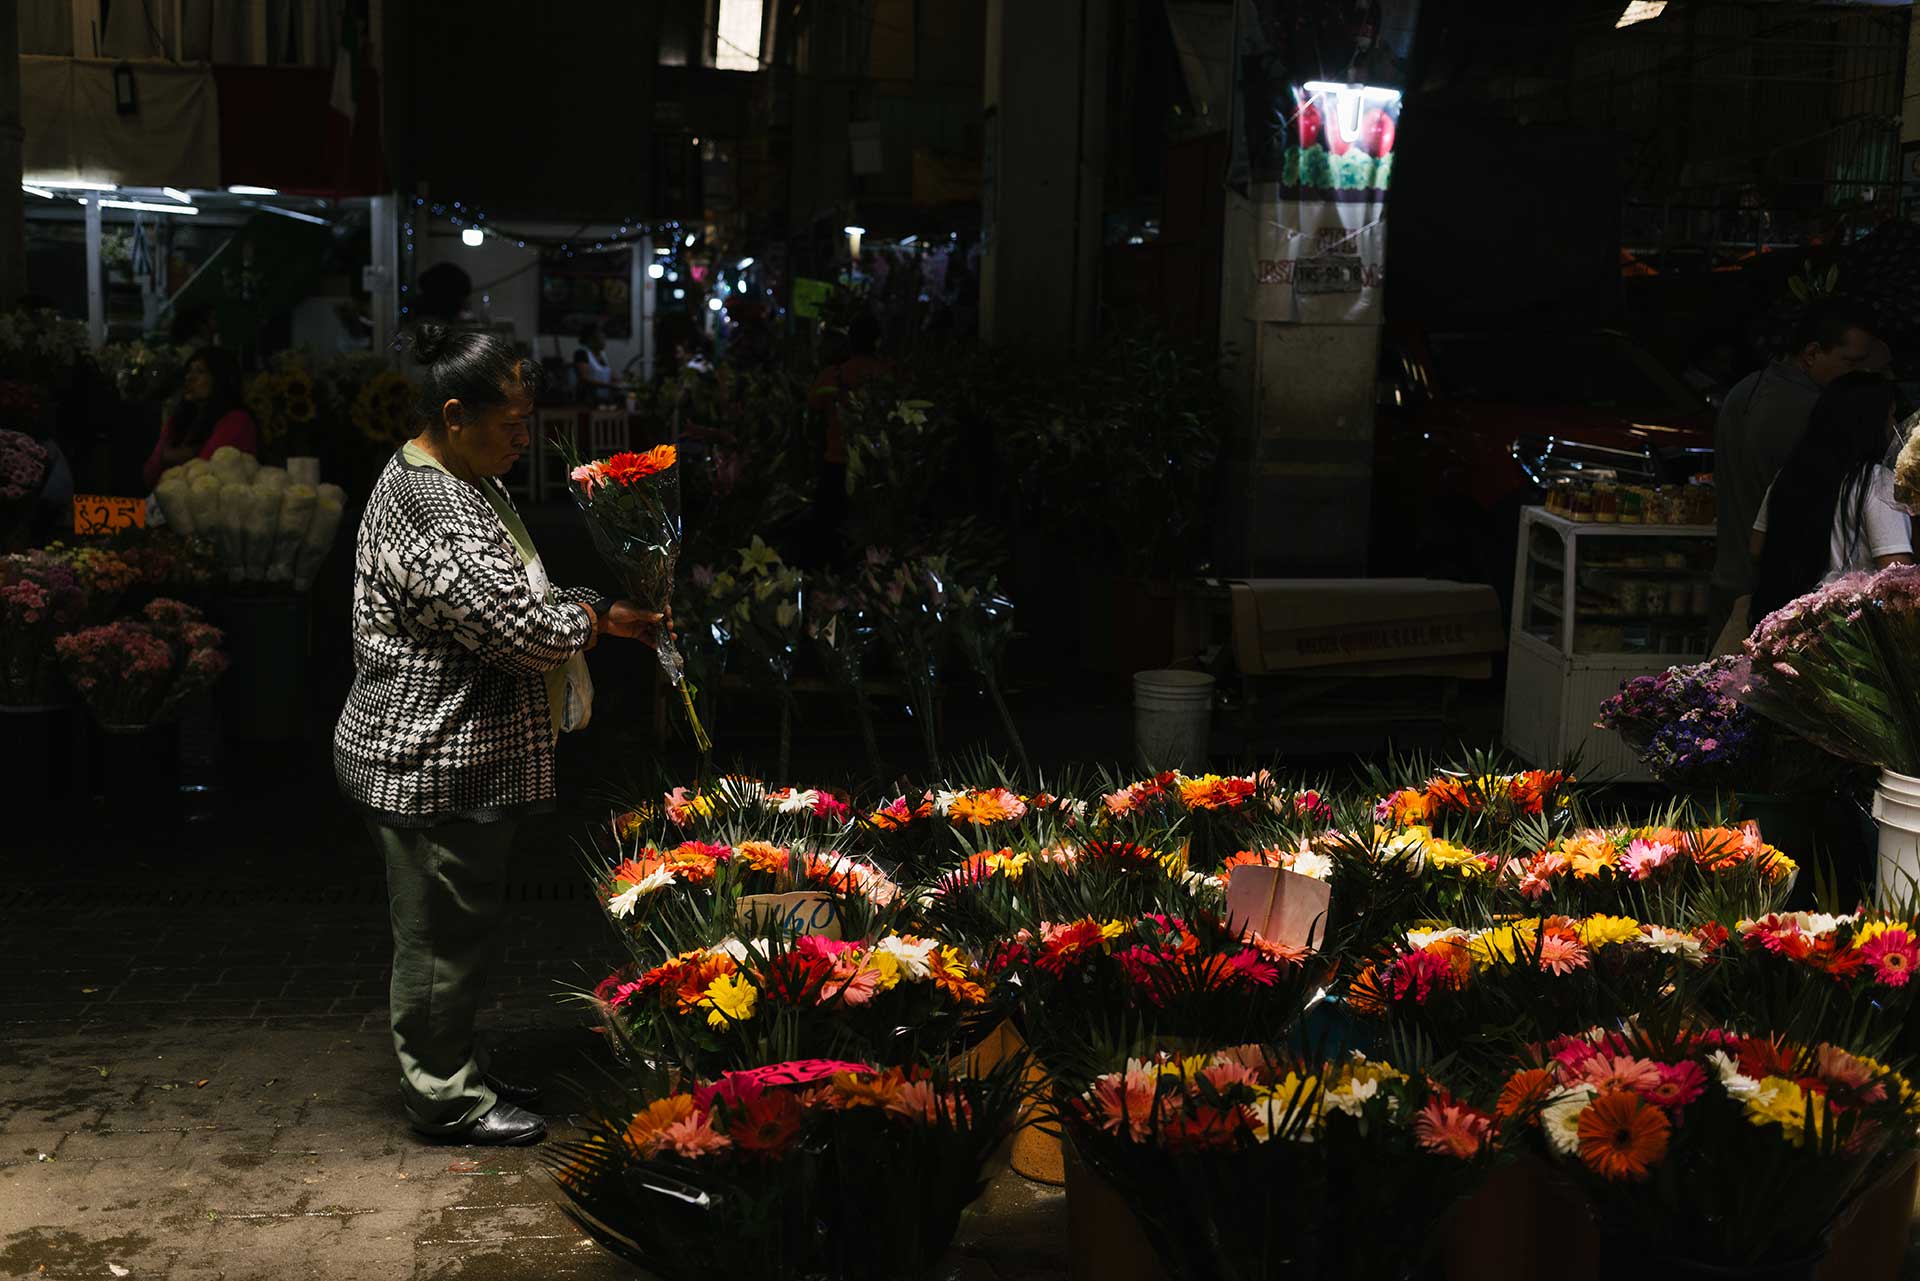 Vendors selling produce at Mercado de Jamaica, Mexico City